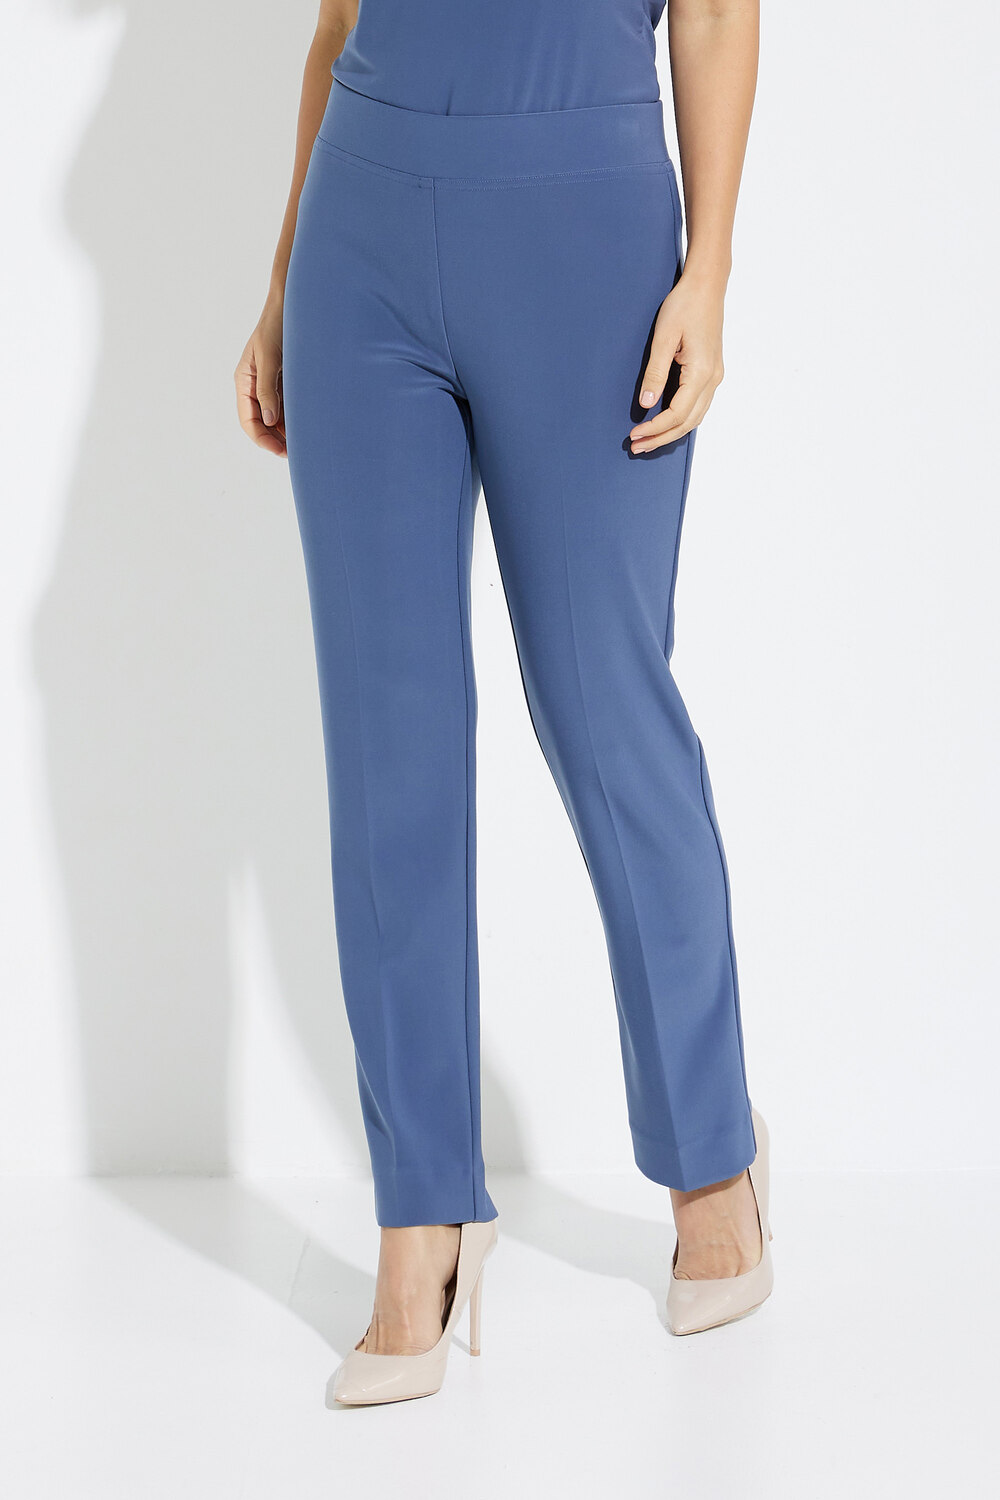 Pantalon 7/8, plis marqués Modèle 143105S24. Mineral Blue